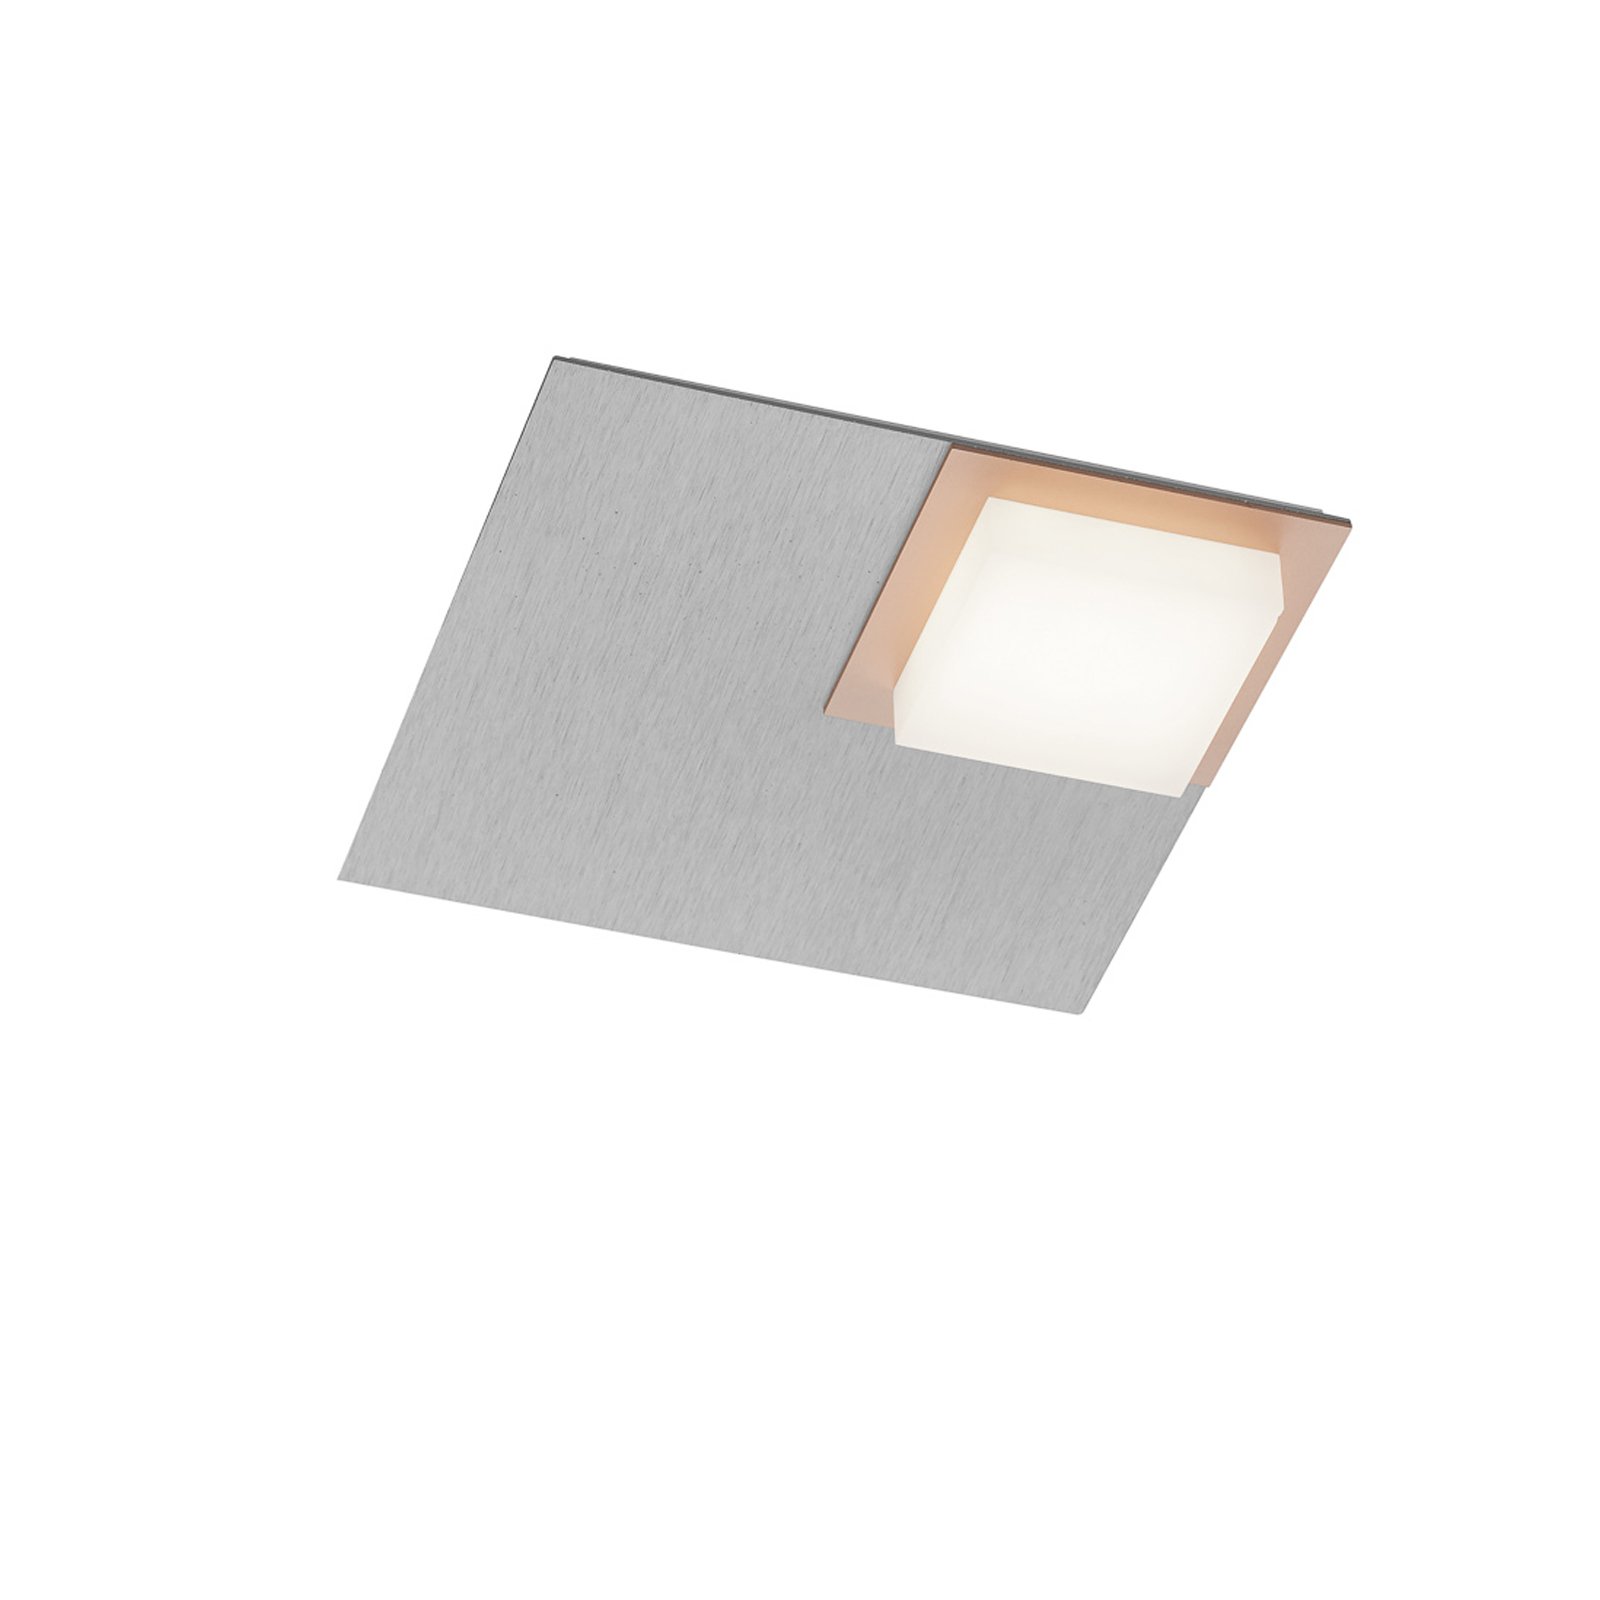 BANKAMP Quadro LED ceiling light 8 W silver